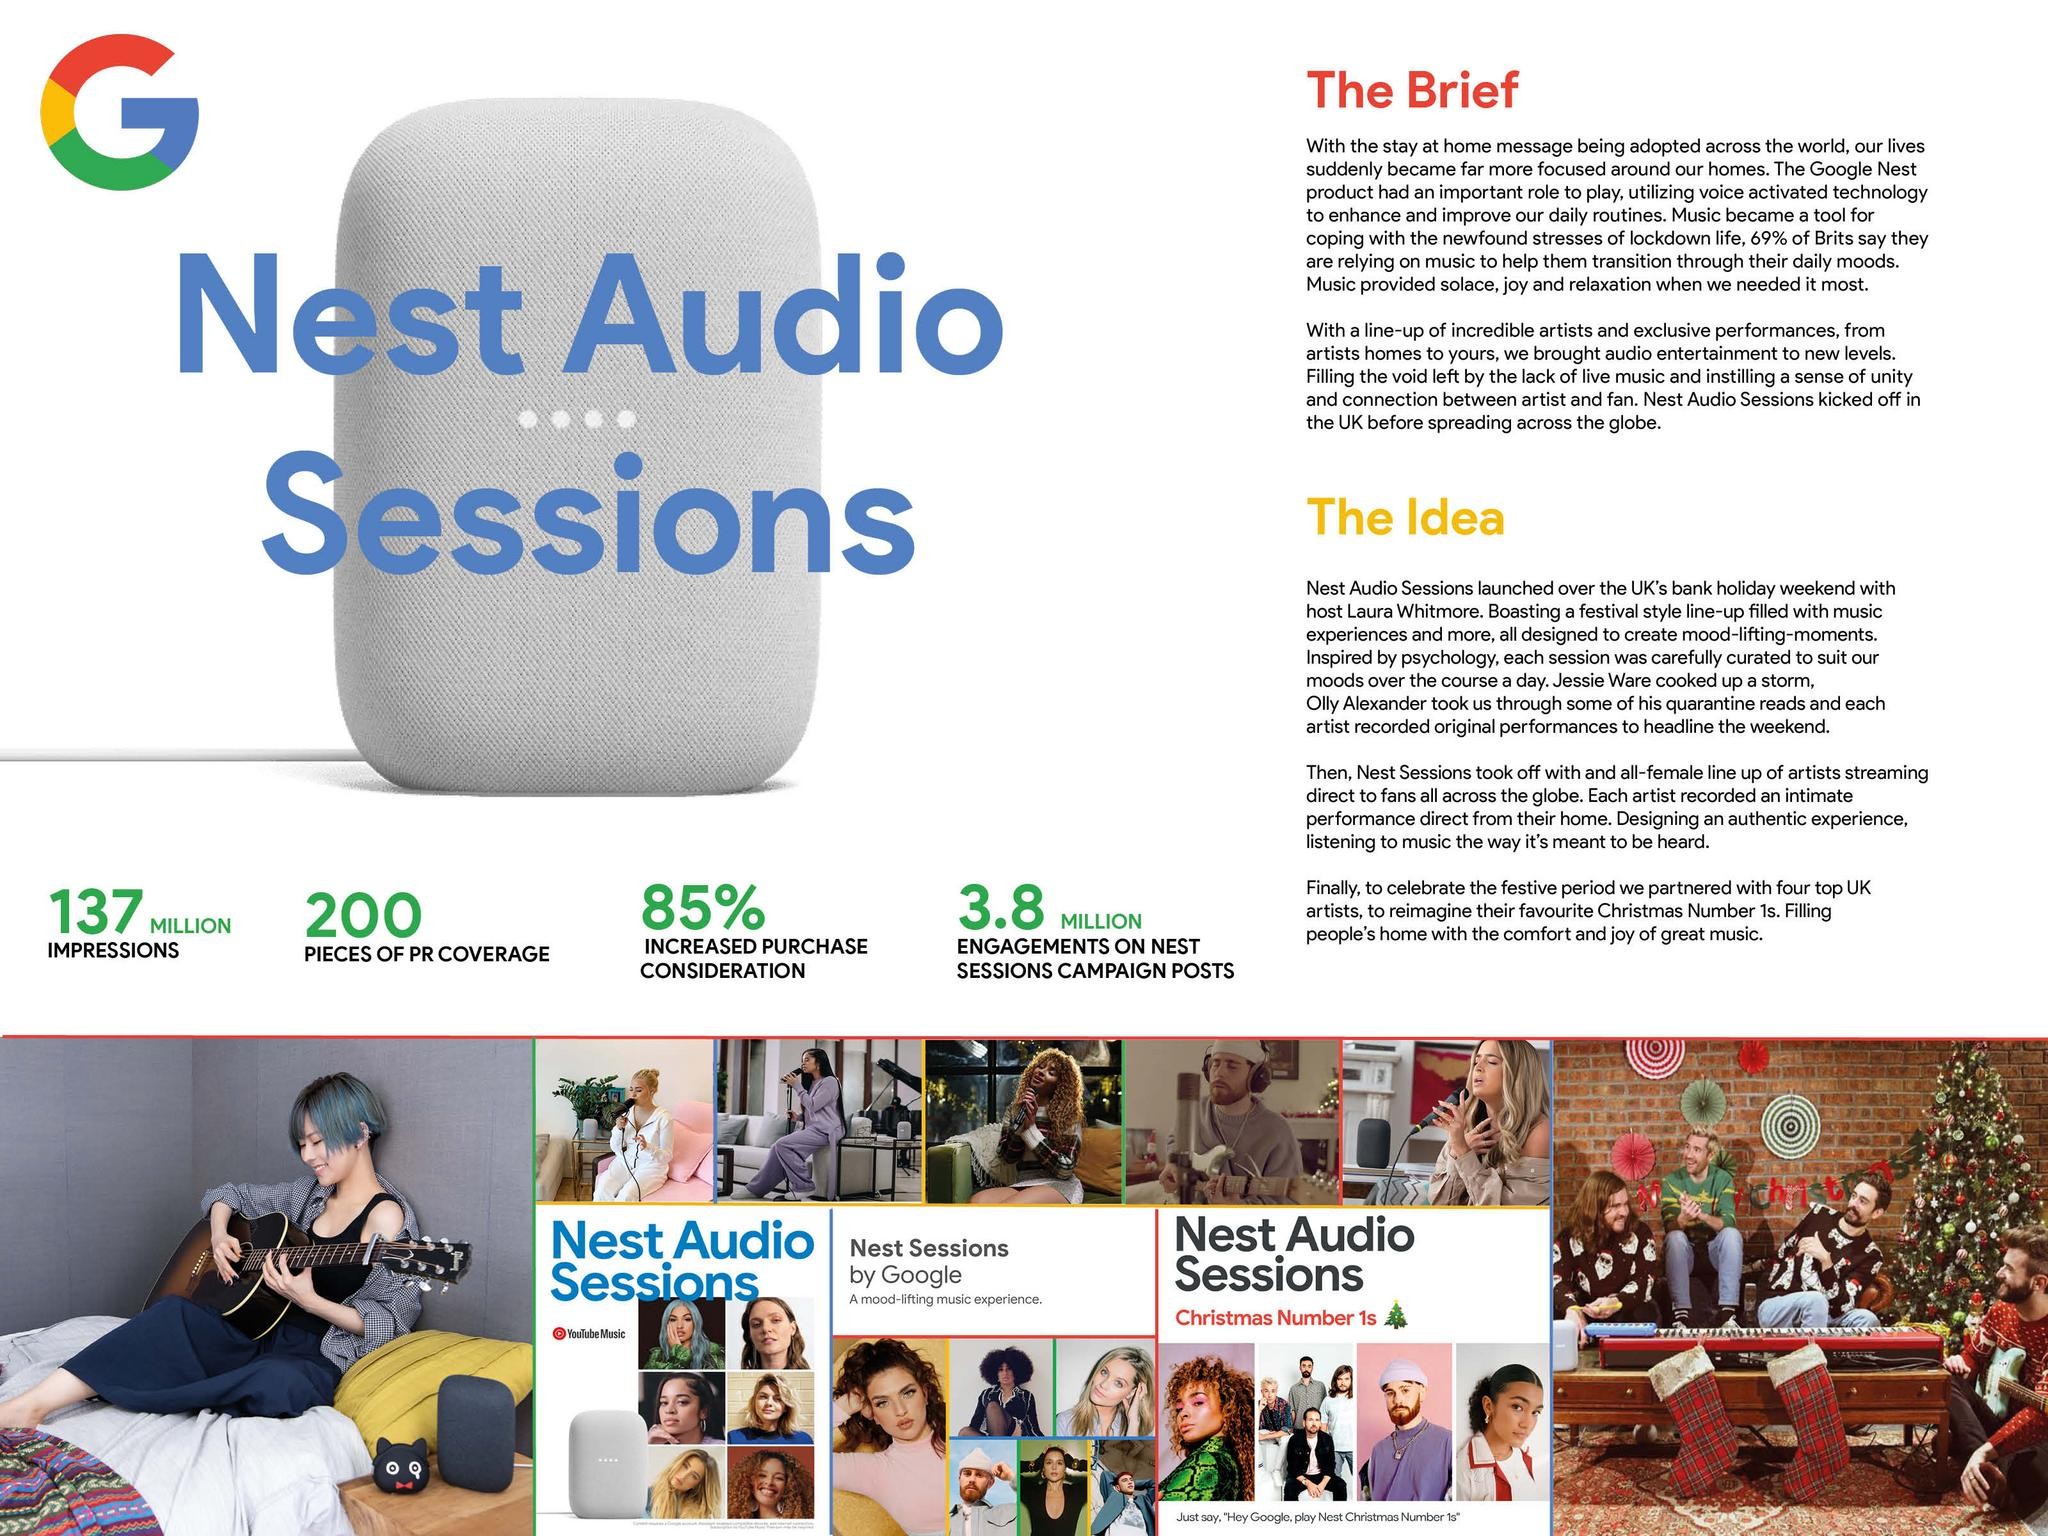 Nest Audio Sessions